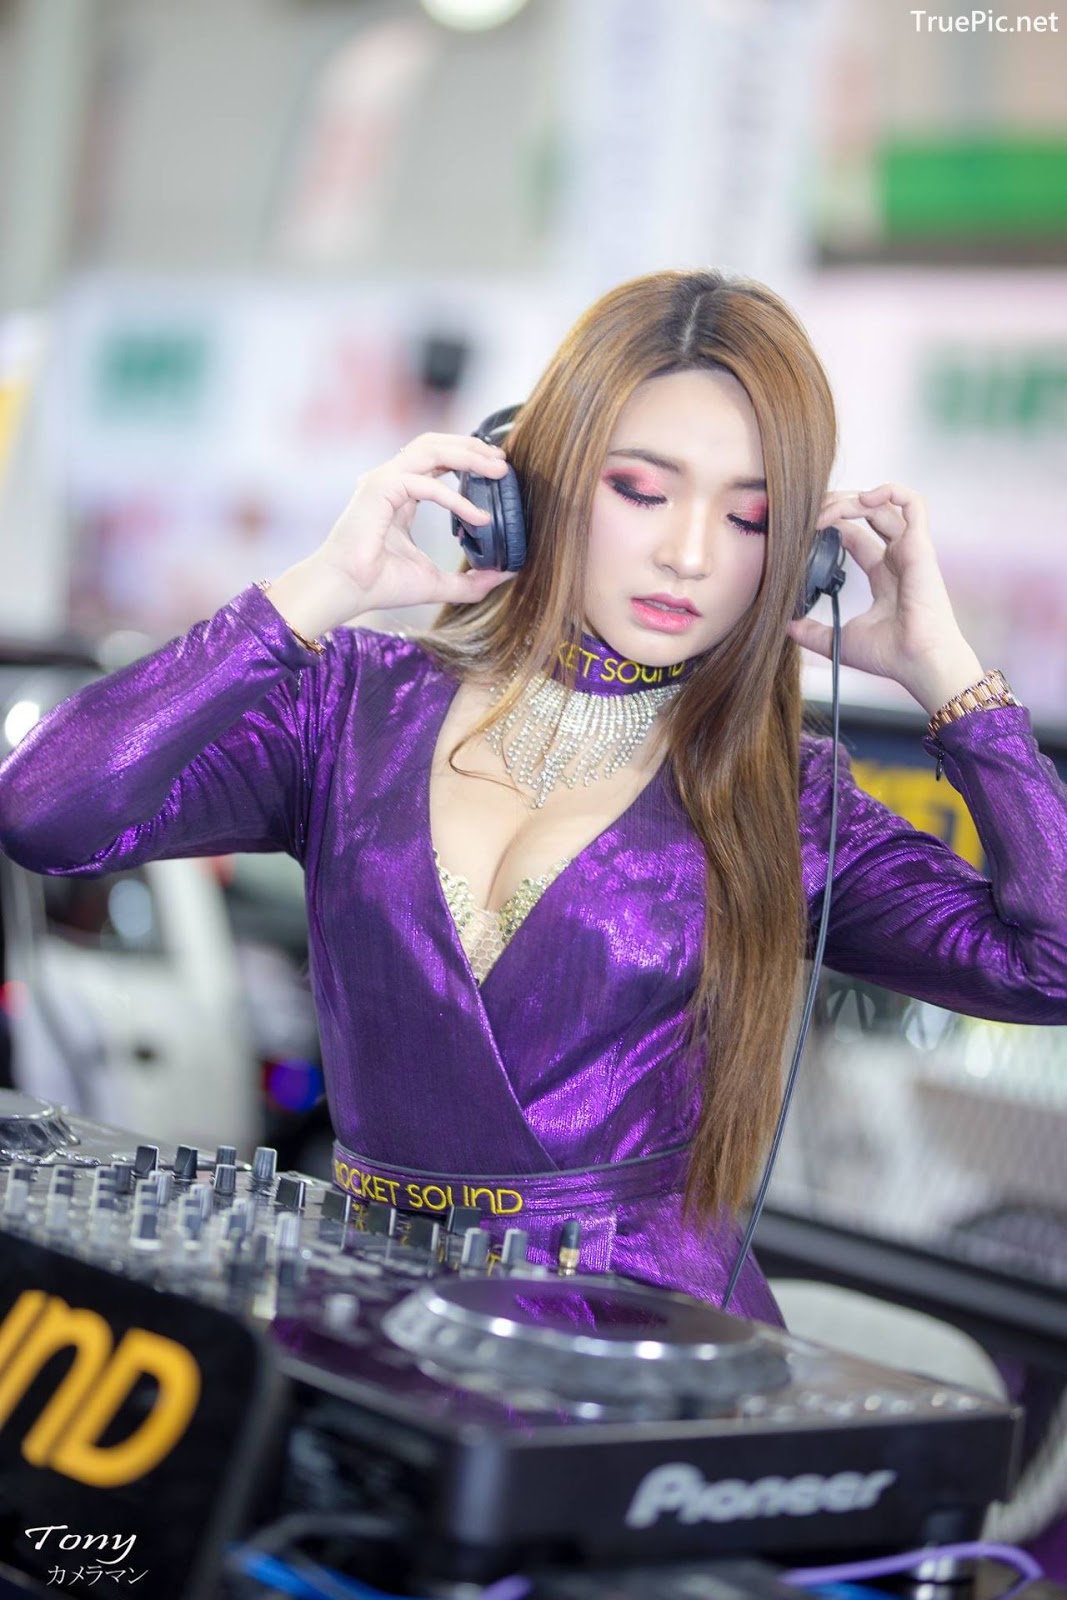 Image-Thailand-Hot-Model-Thai-Racing-Girl-At-Big-Motor-2018-TruePic.net- Picture-51